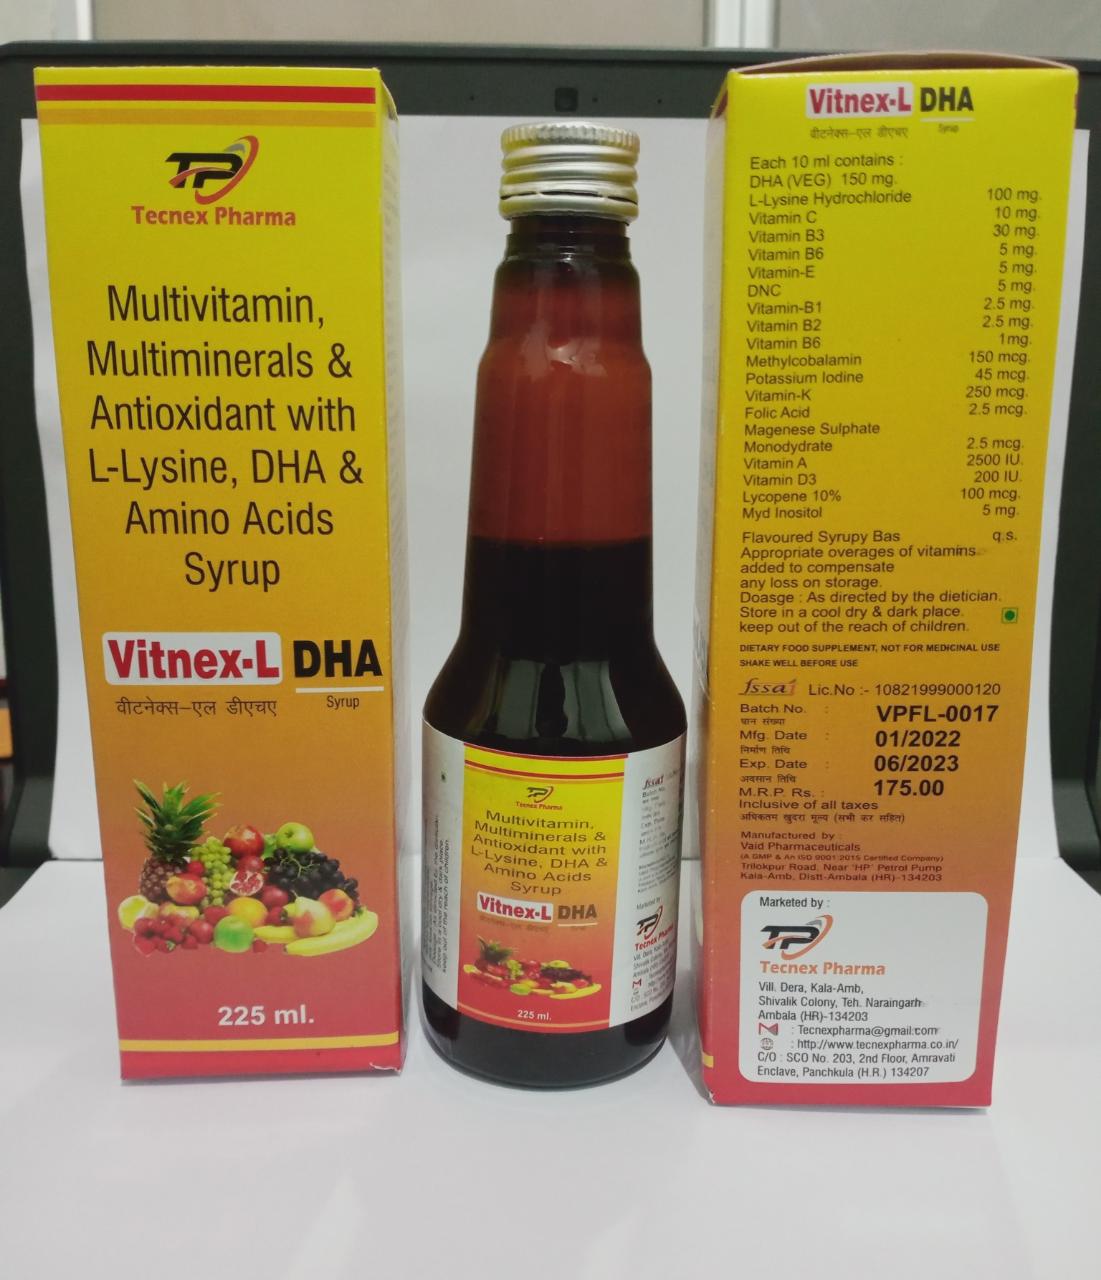 VITNEX-L DHA Syrup